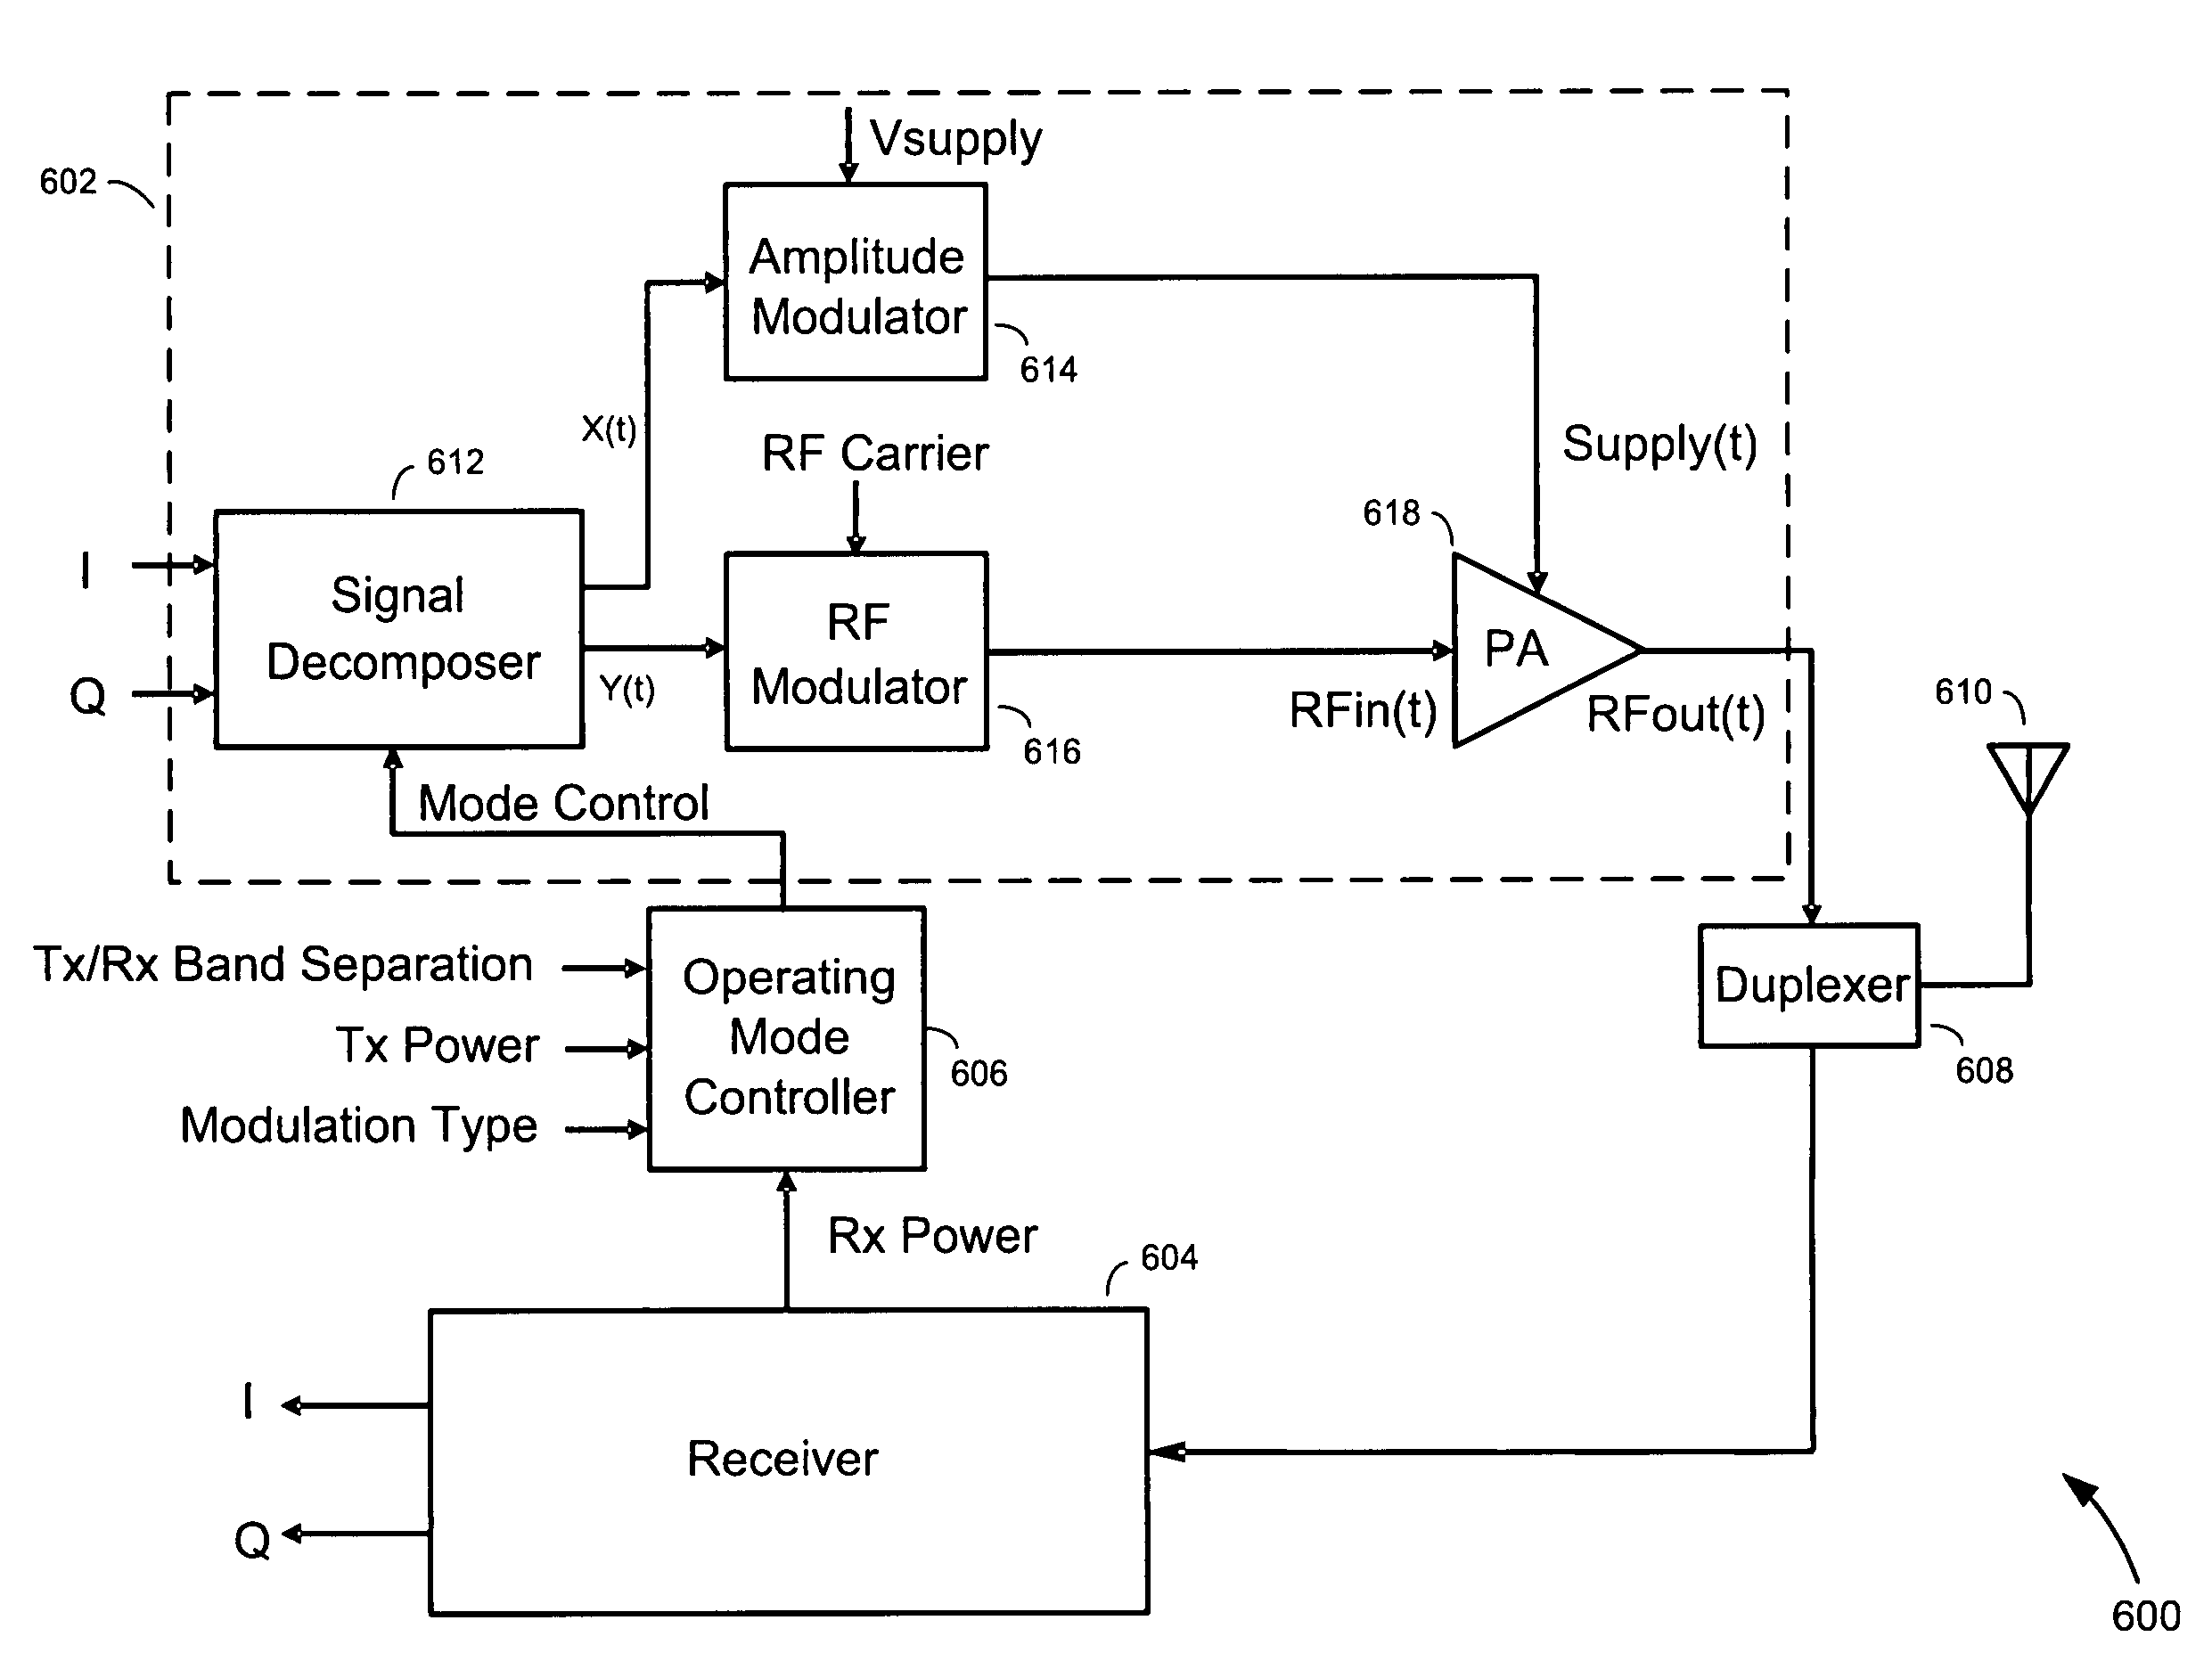 Multi-mode transmitter having adaptive operating mode control